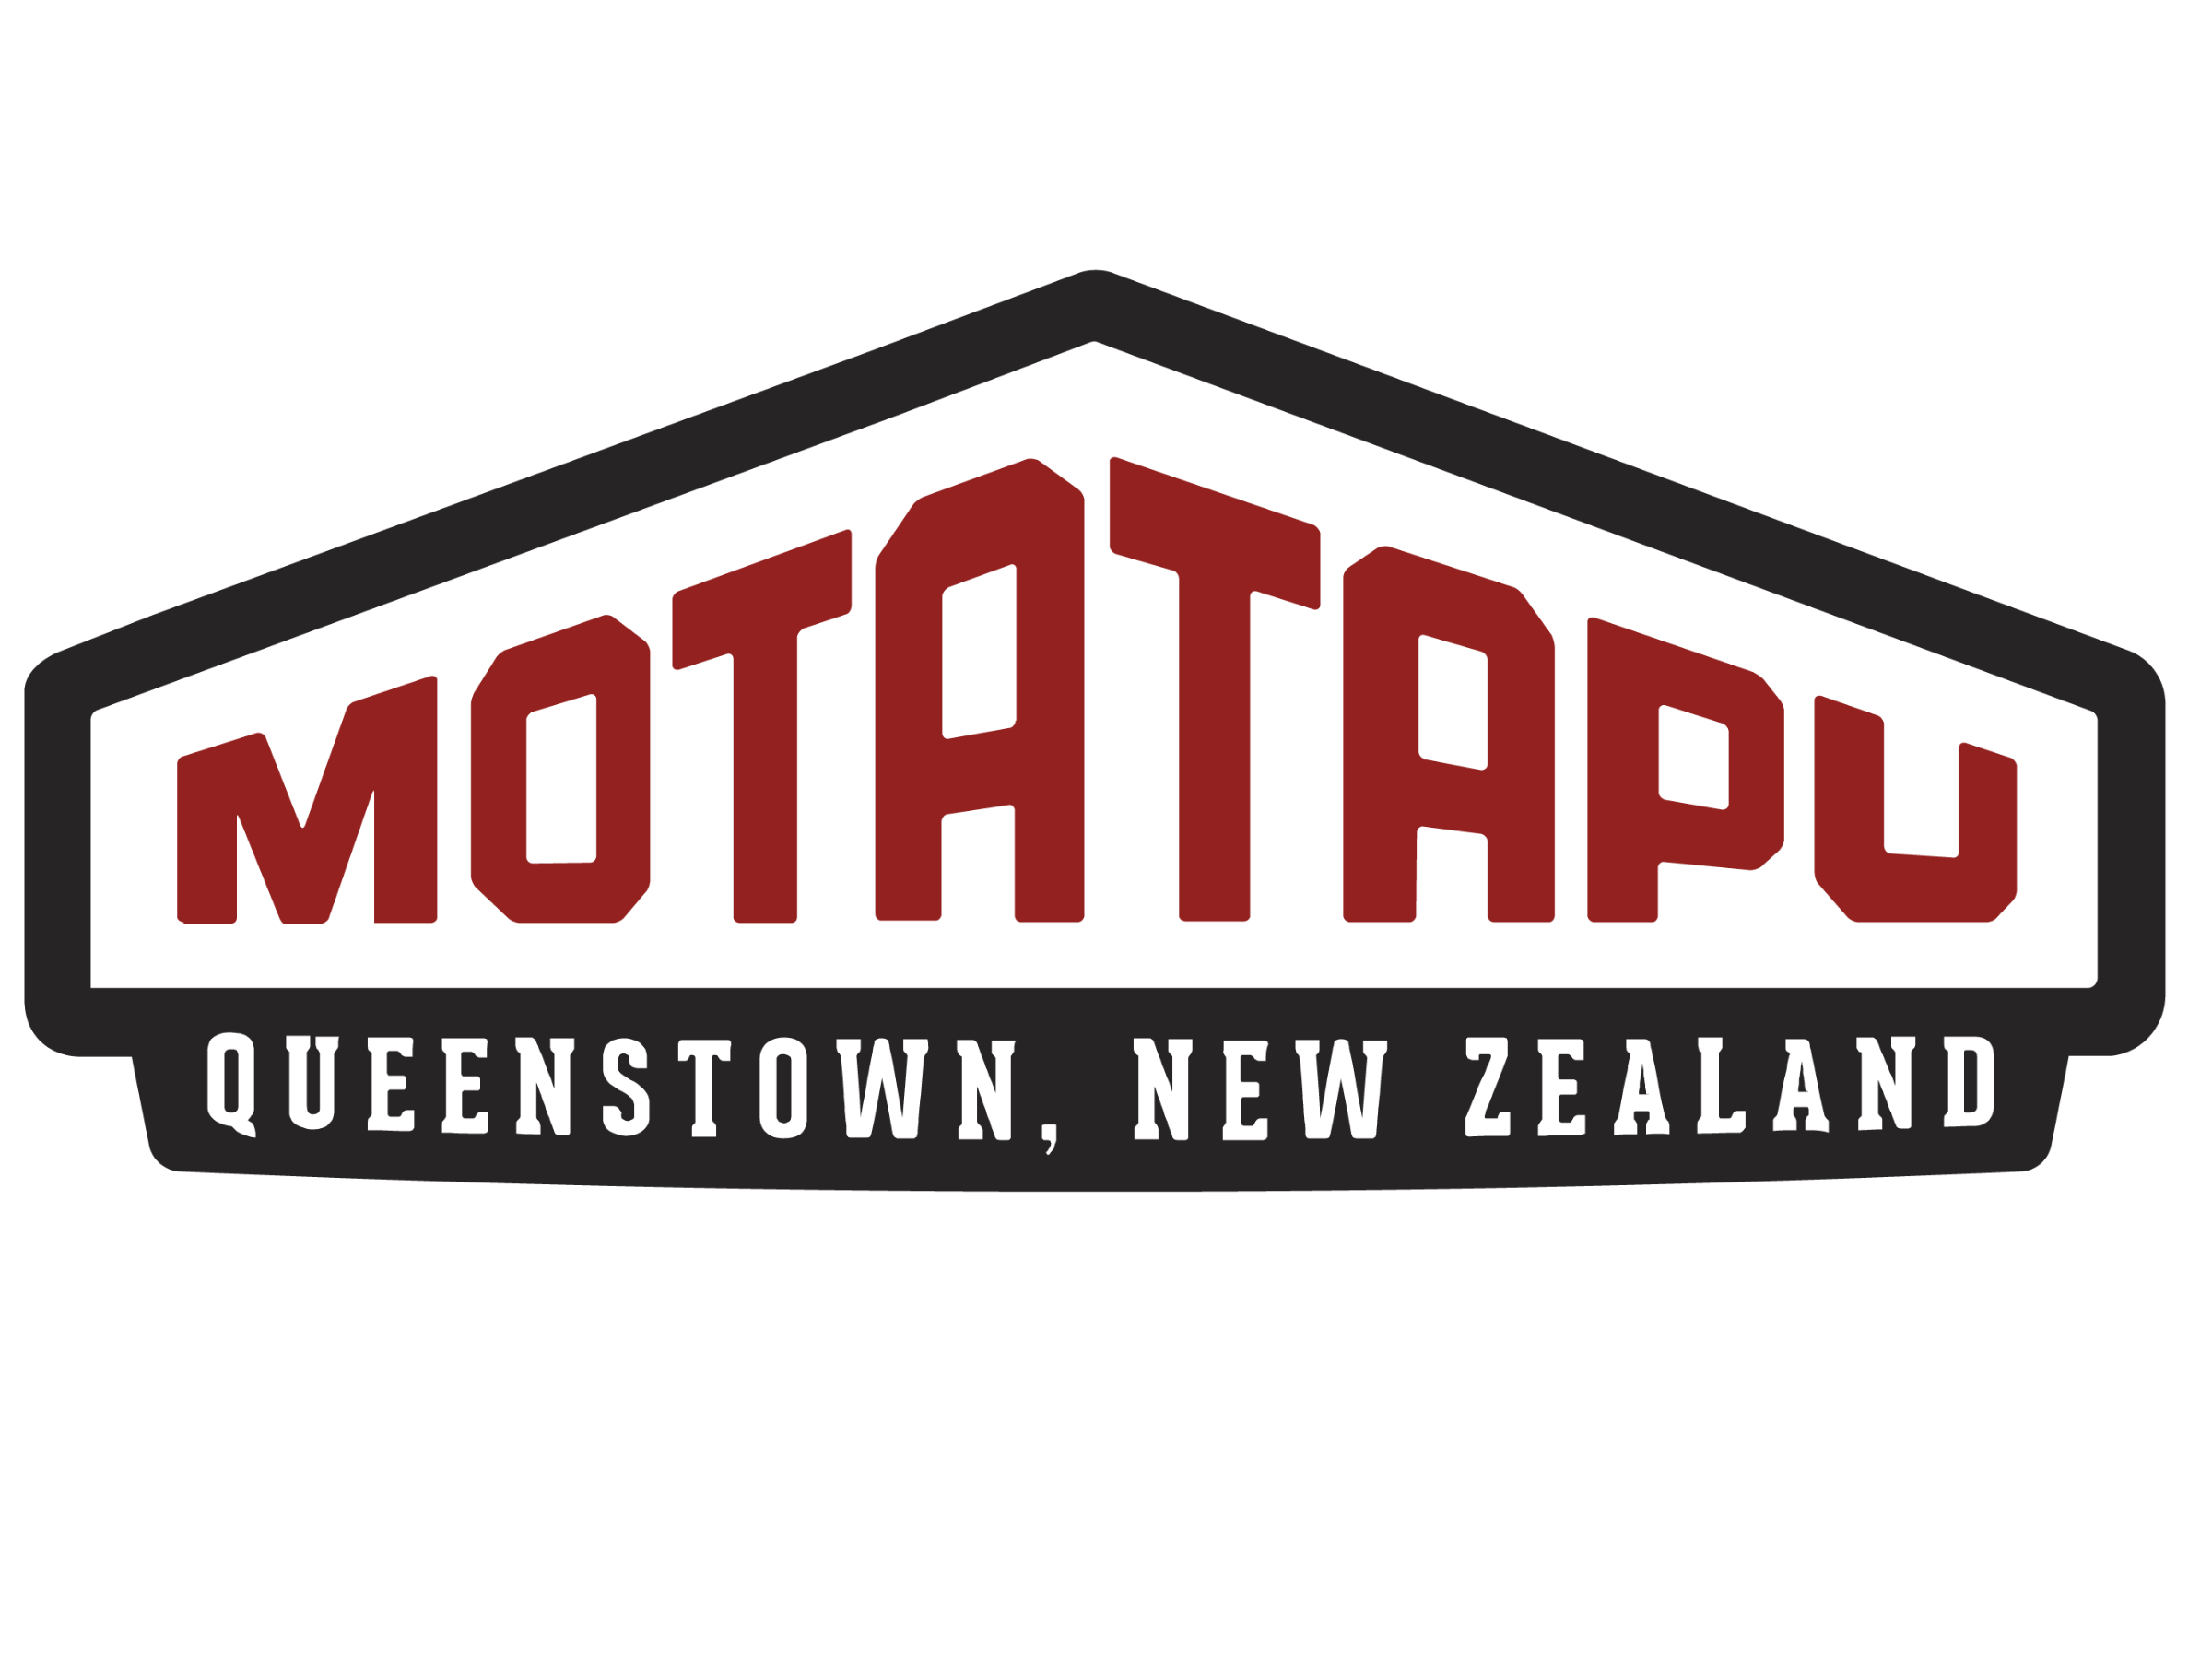 Motatapu logo on RaceRaves